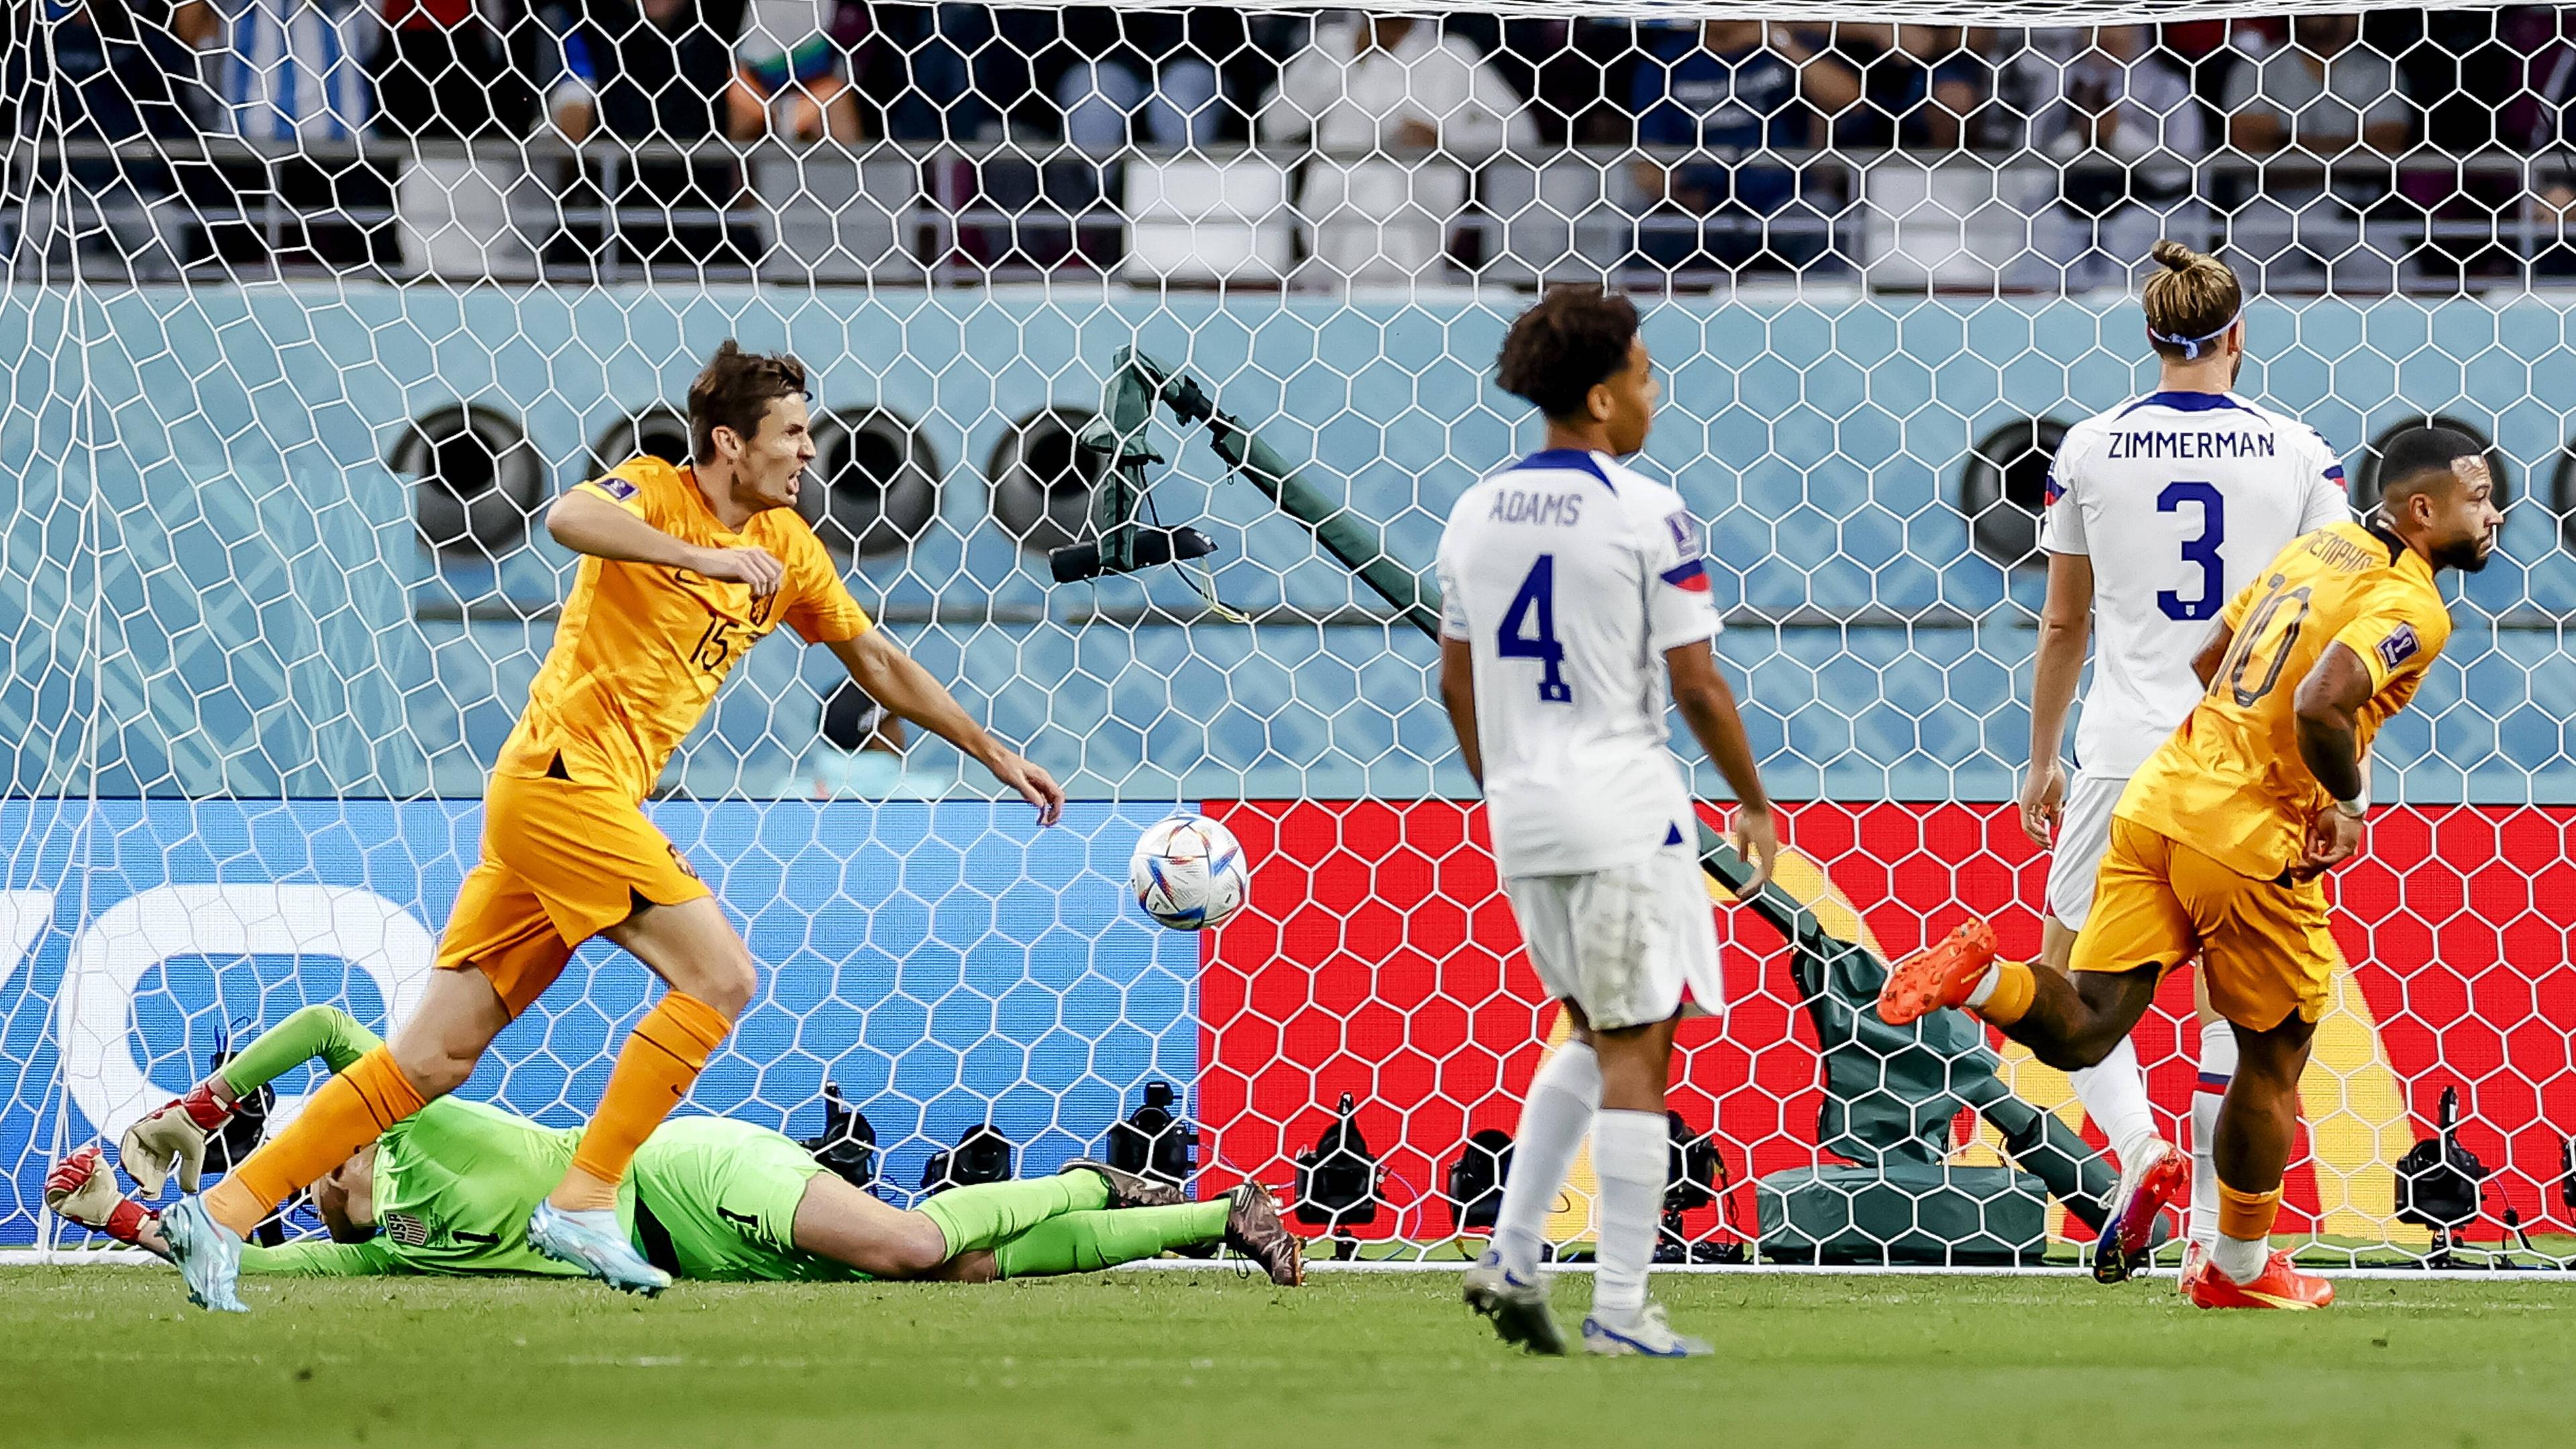 Memphis Depay aus den  Niederlanden (R) erzielt das 1:0 gegen den US-Torhüter Matt Turner während der FIFA-Weltmeisterschaft des Spiels zwischen den Niederlanden und den Vereinigten Staaten im Khalifa International Stadium am 3. Dezember 2022